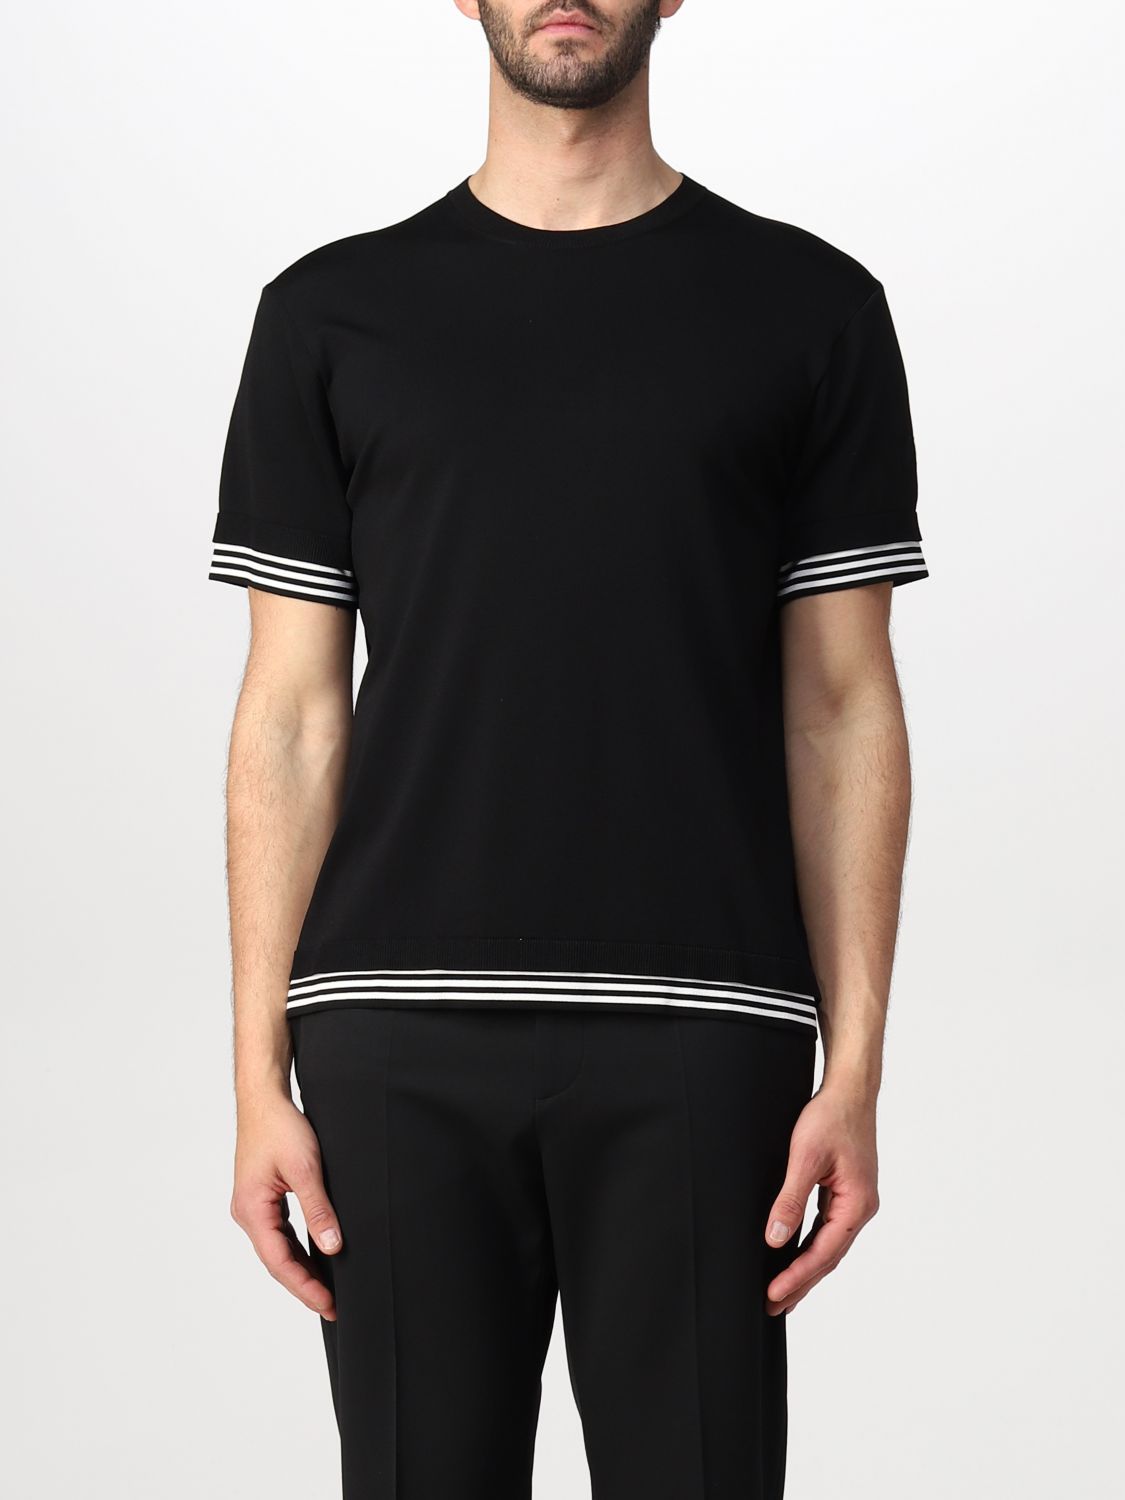 NEIL BARRETT: t-shirt for man - Black | Neil Barrett t-shirt ...